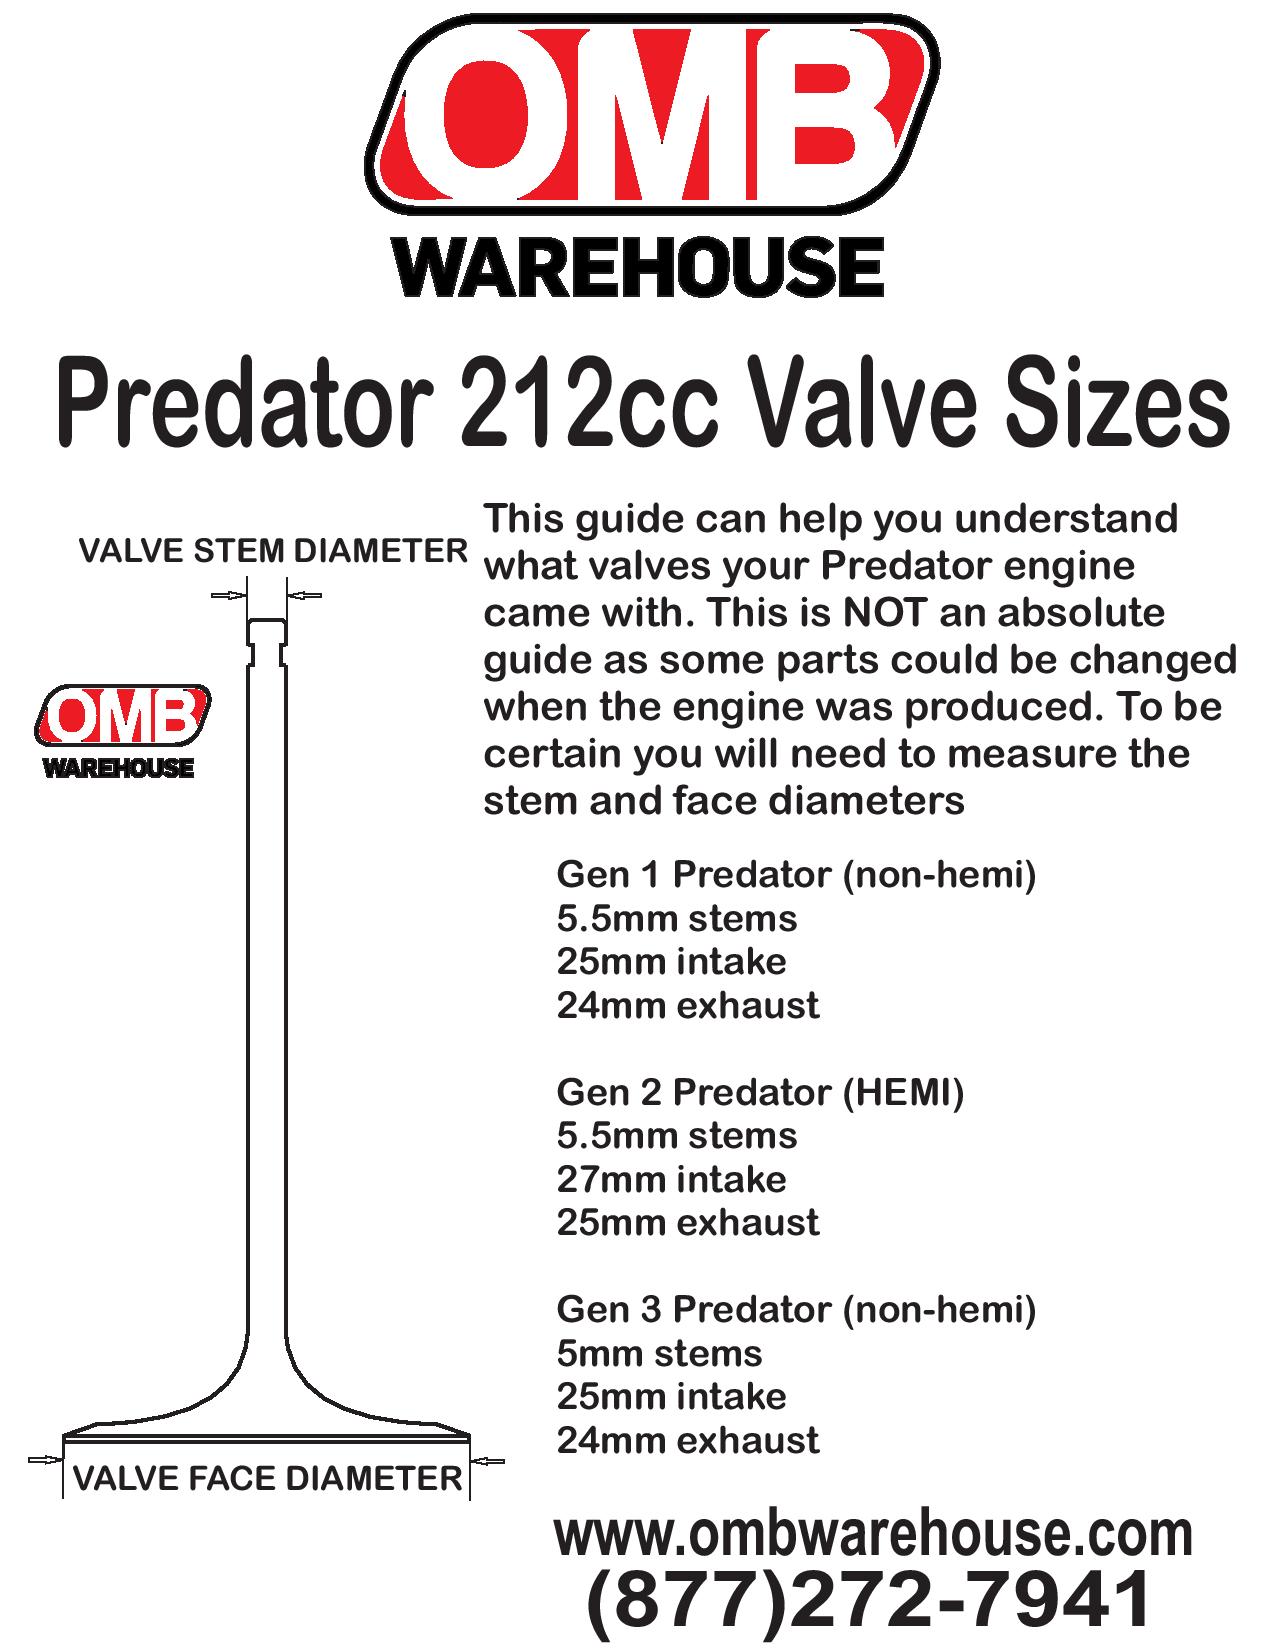 OMBW_PRED_212_valve_sizes-page-001.jpg